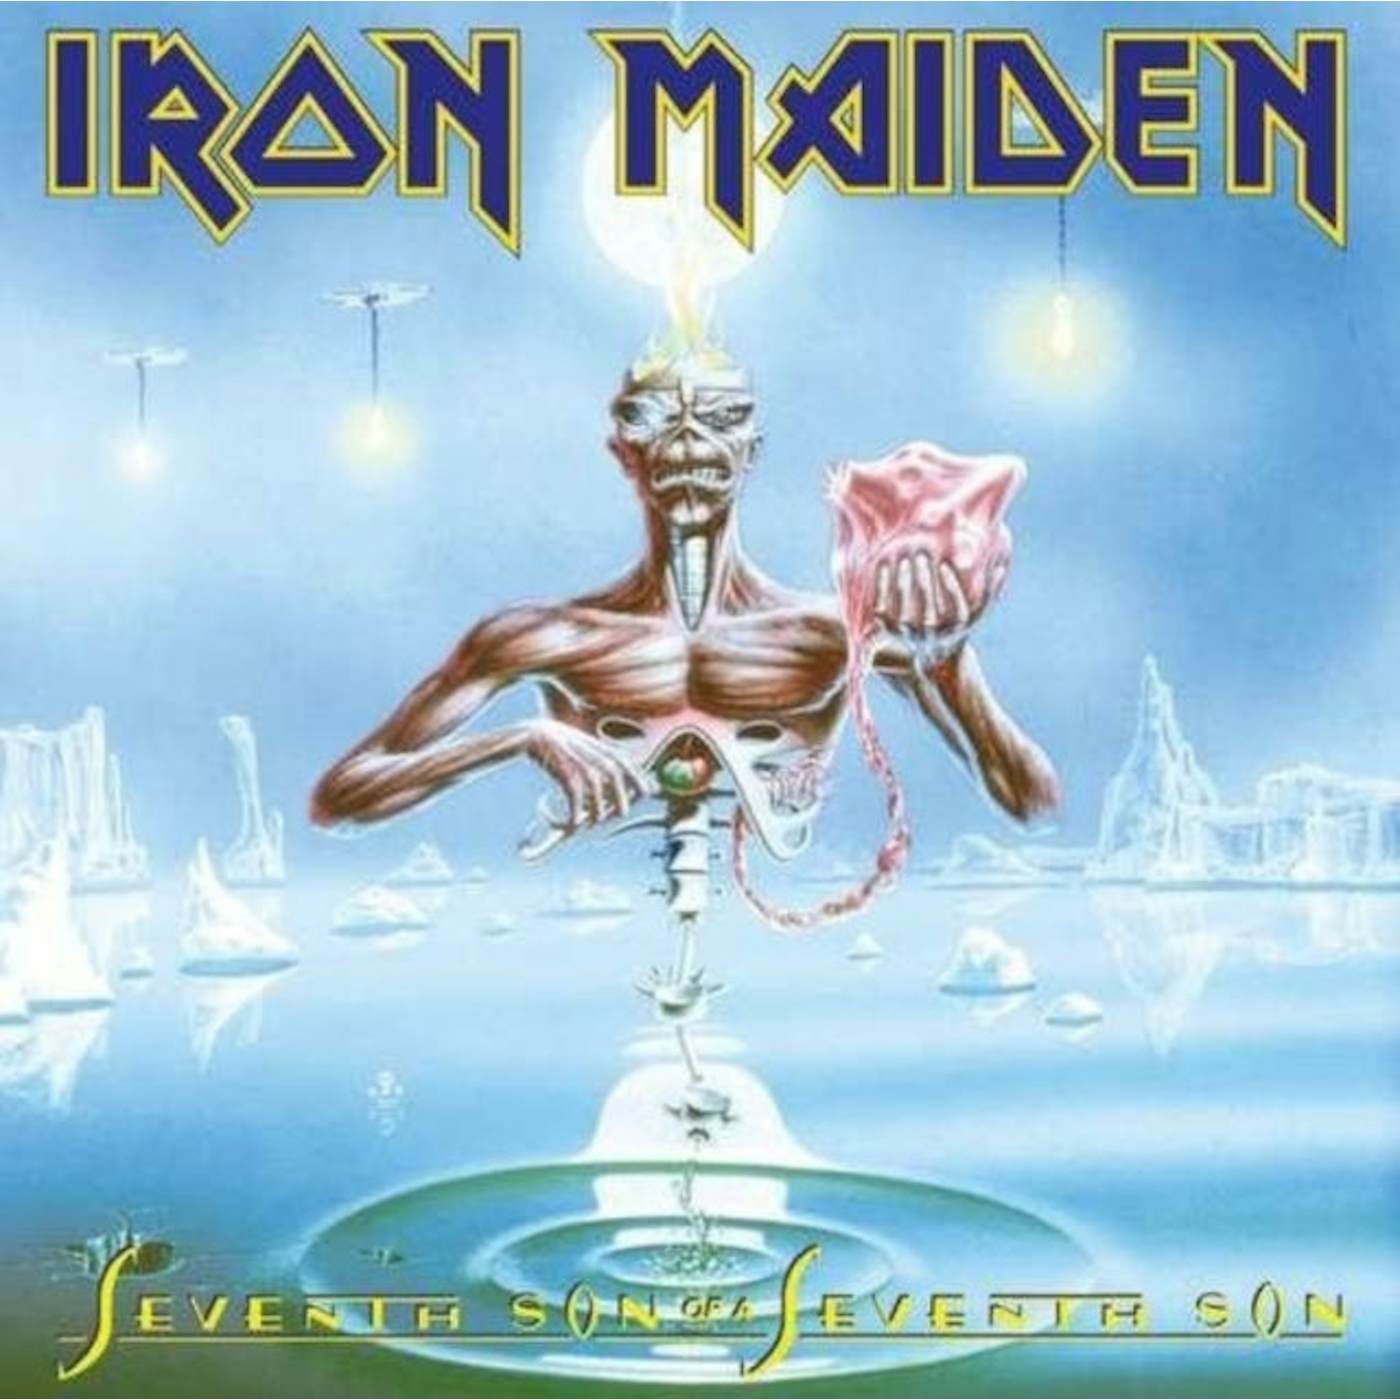 Iron Maiden LP Vinyl Record - Seventh Son Of A Seventh Son